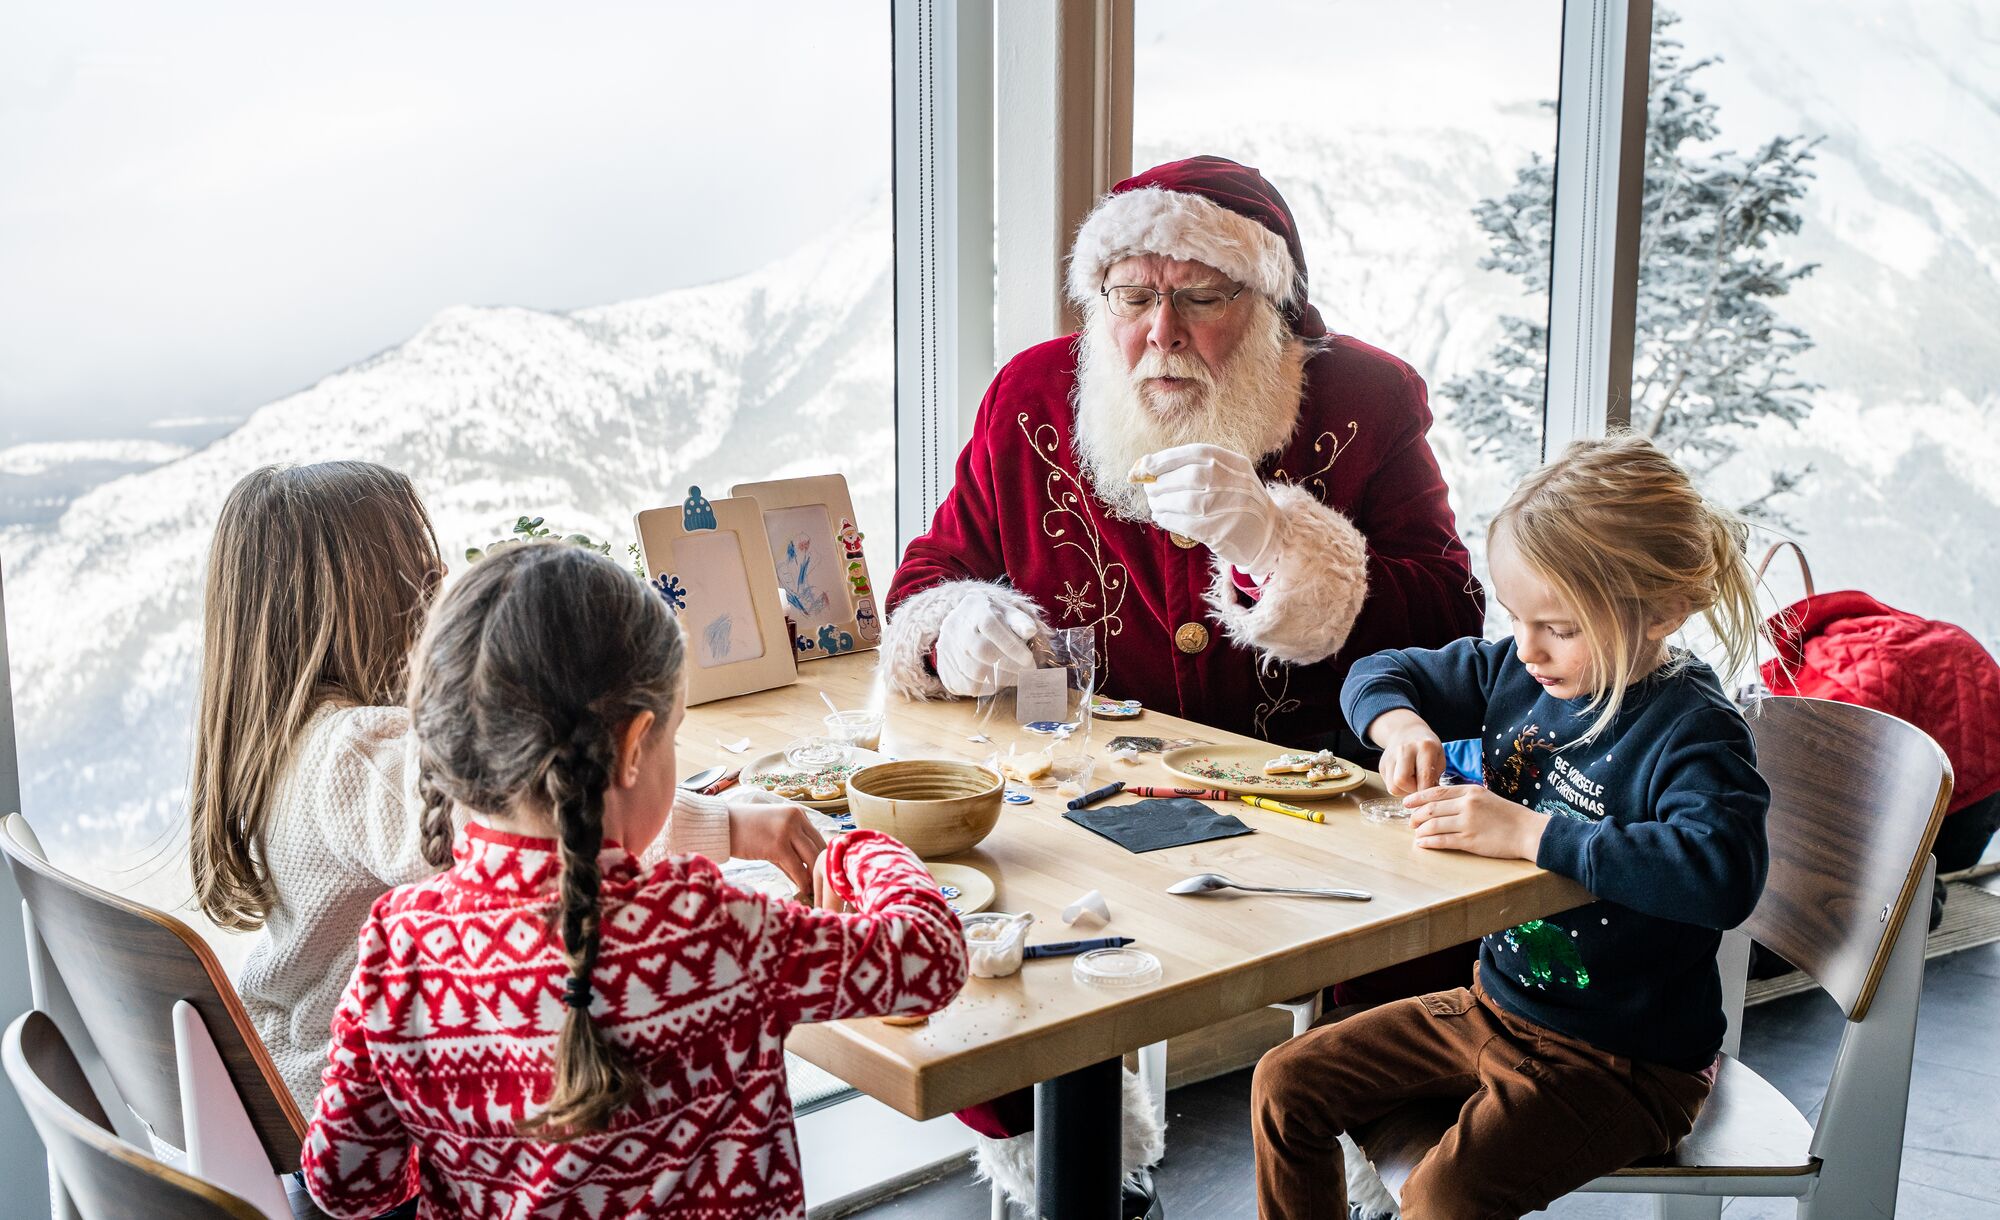 Santa makes crafts with kids at Mountaintop Christmas at the Banff Gondola in Banff National Park.